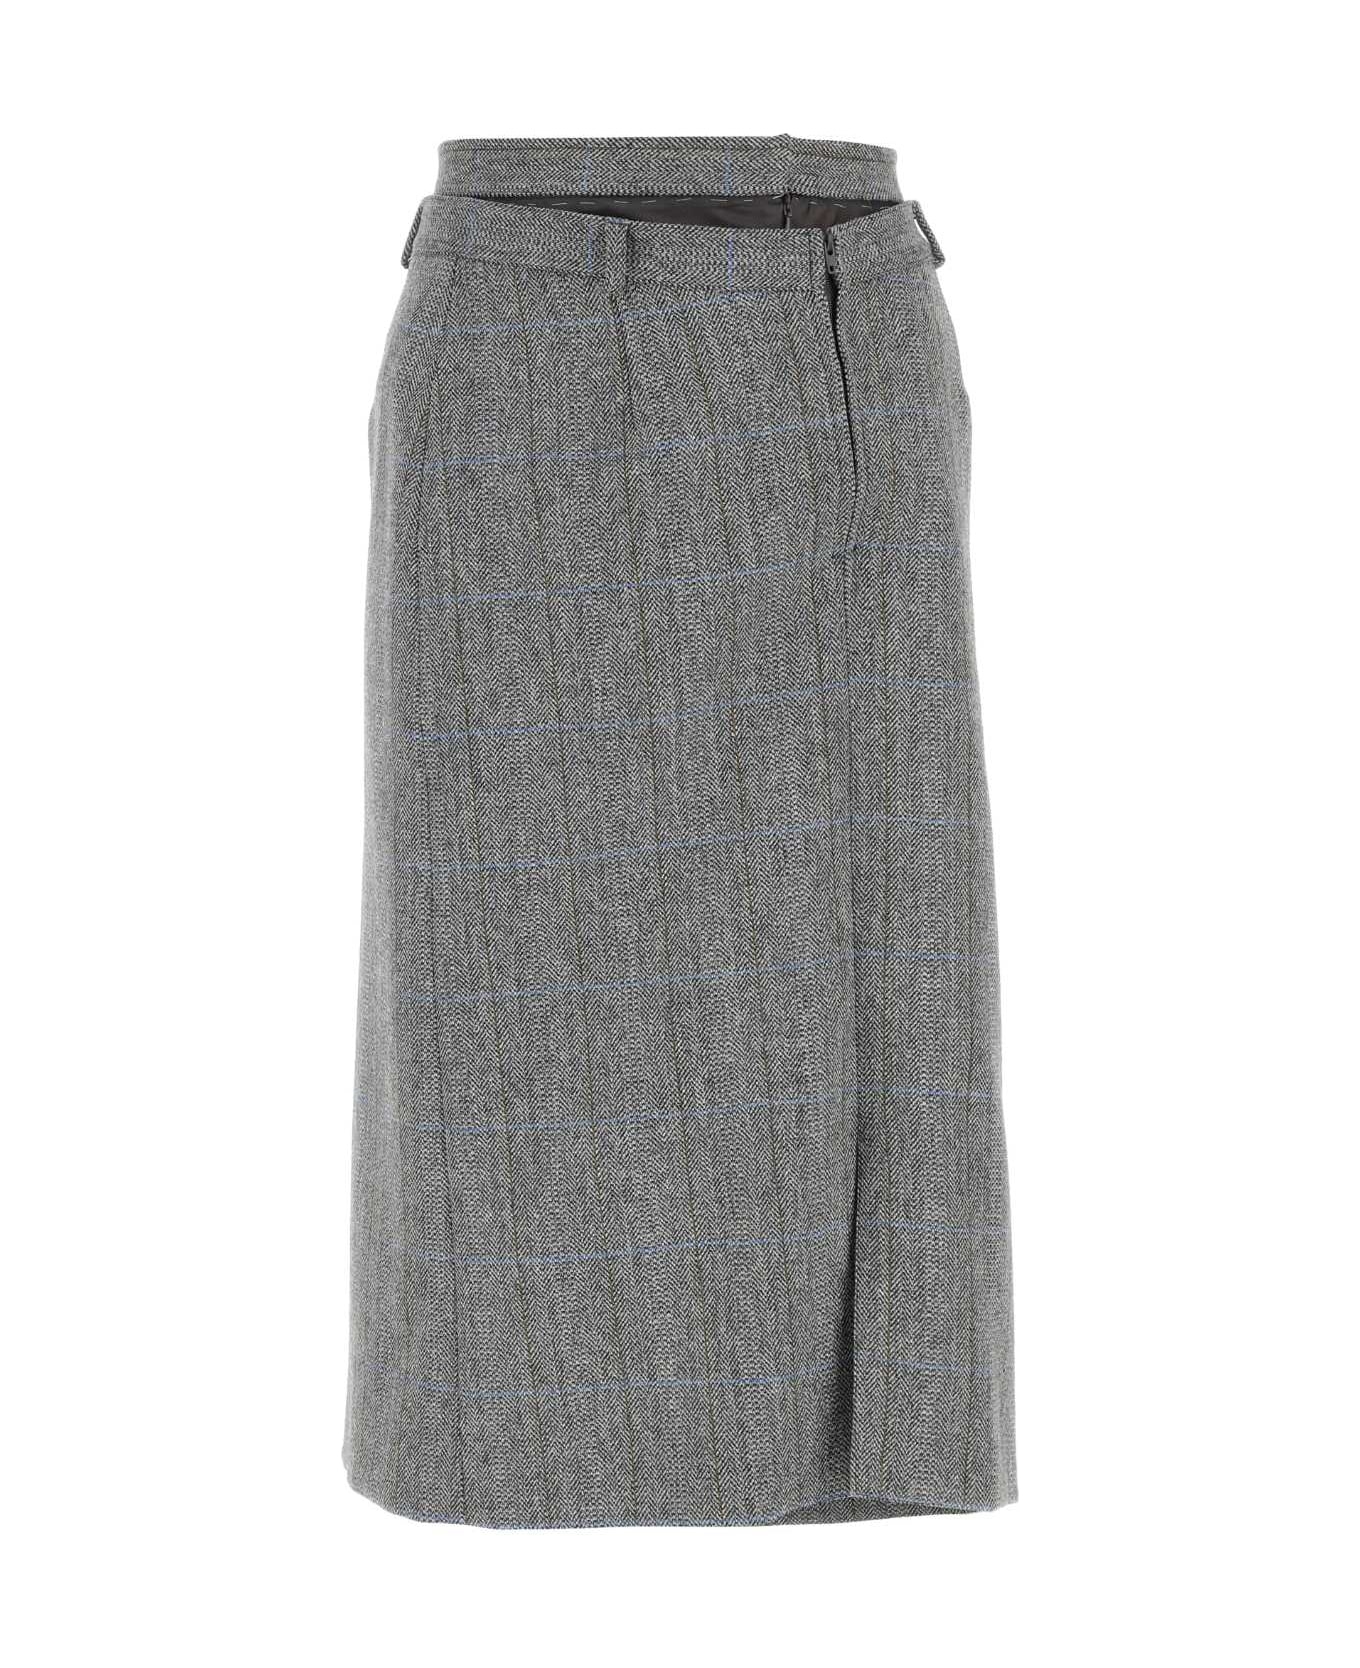 Maison Margiela Embroidered Wool Skirt - 001F スカート